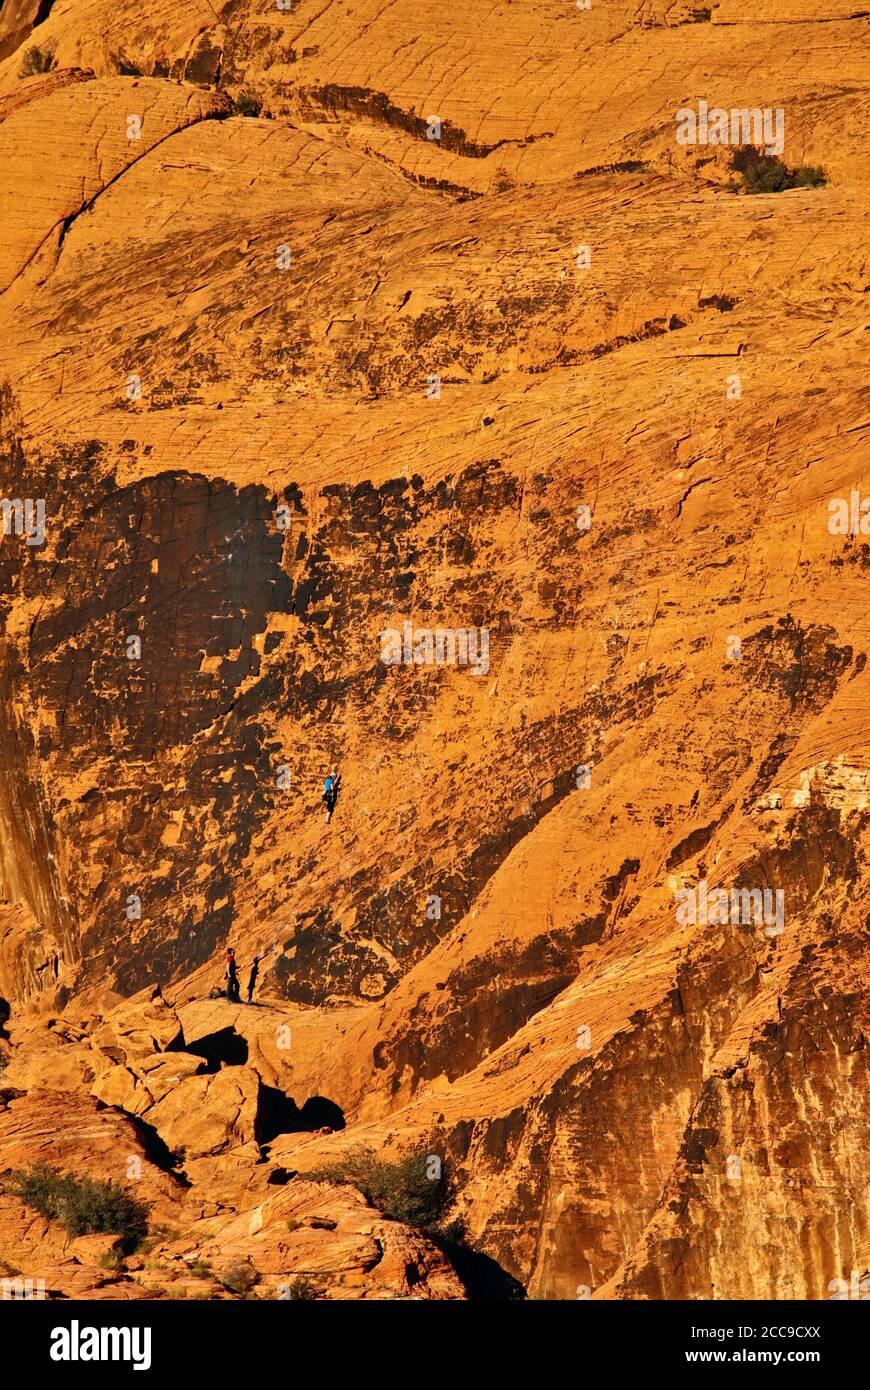 Felskletterer an der Sandsteinwand in Calico Hills, Sonnenuntergang, Red Rock Canyon Gebiet in Mojave Wüste in der Nähe von Las Vegas, Nevada, USA Stockfoto